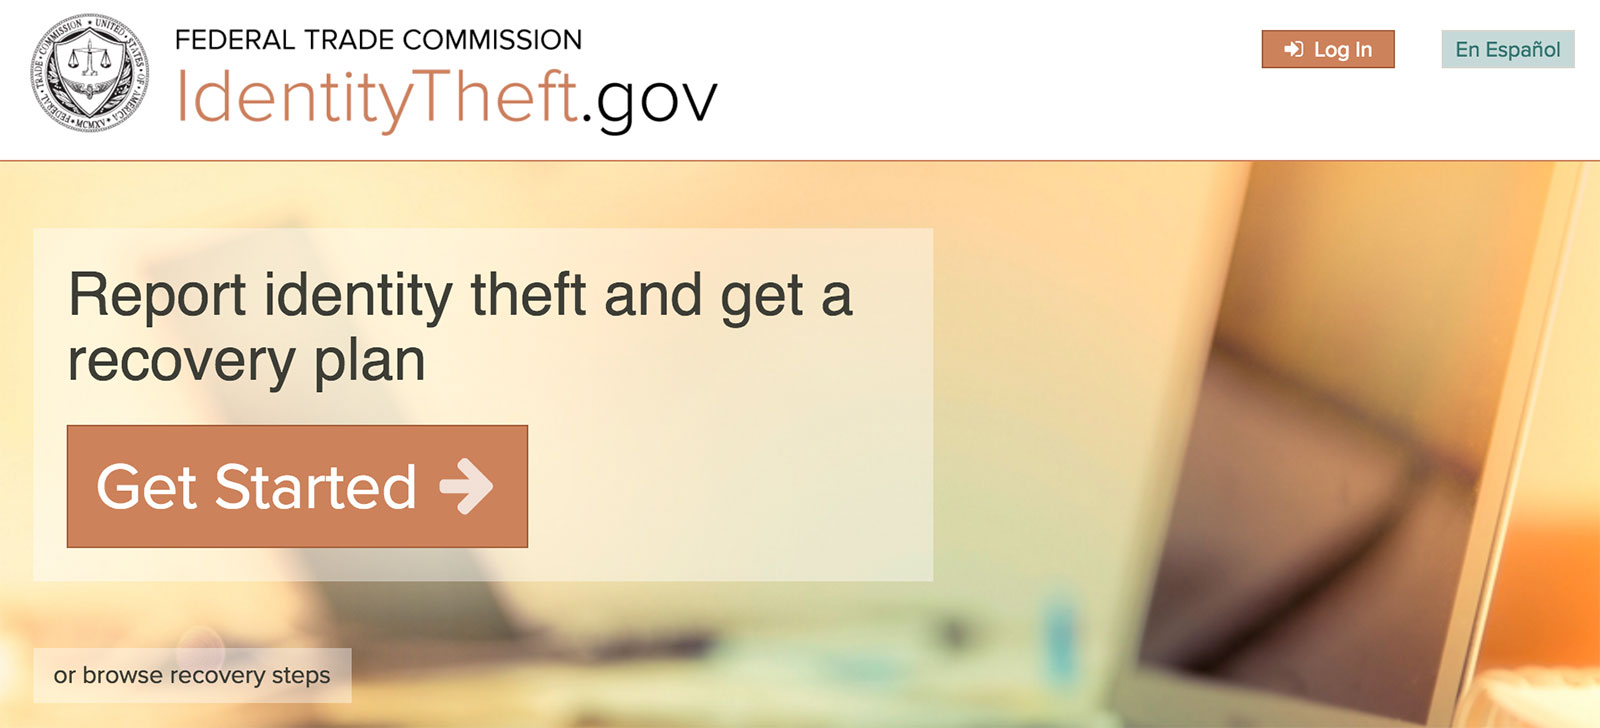 The homepage of identitytheft.gov